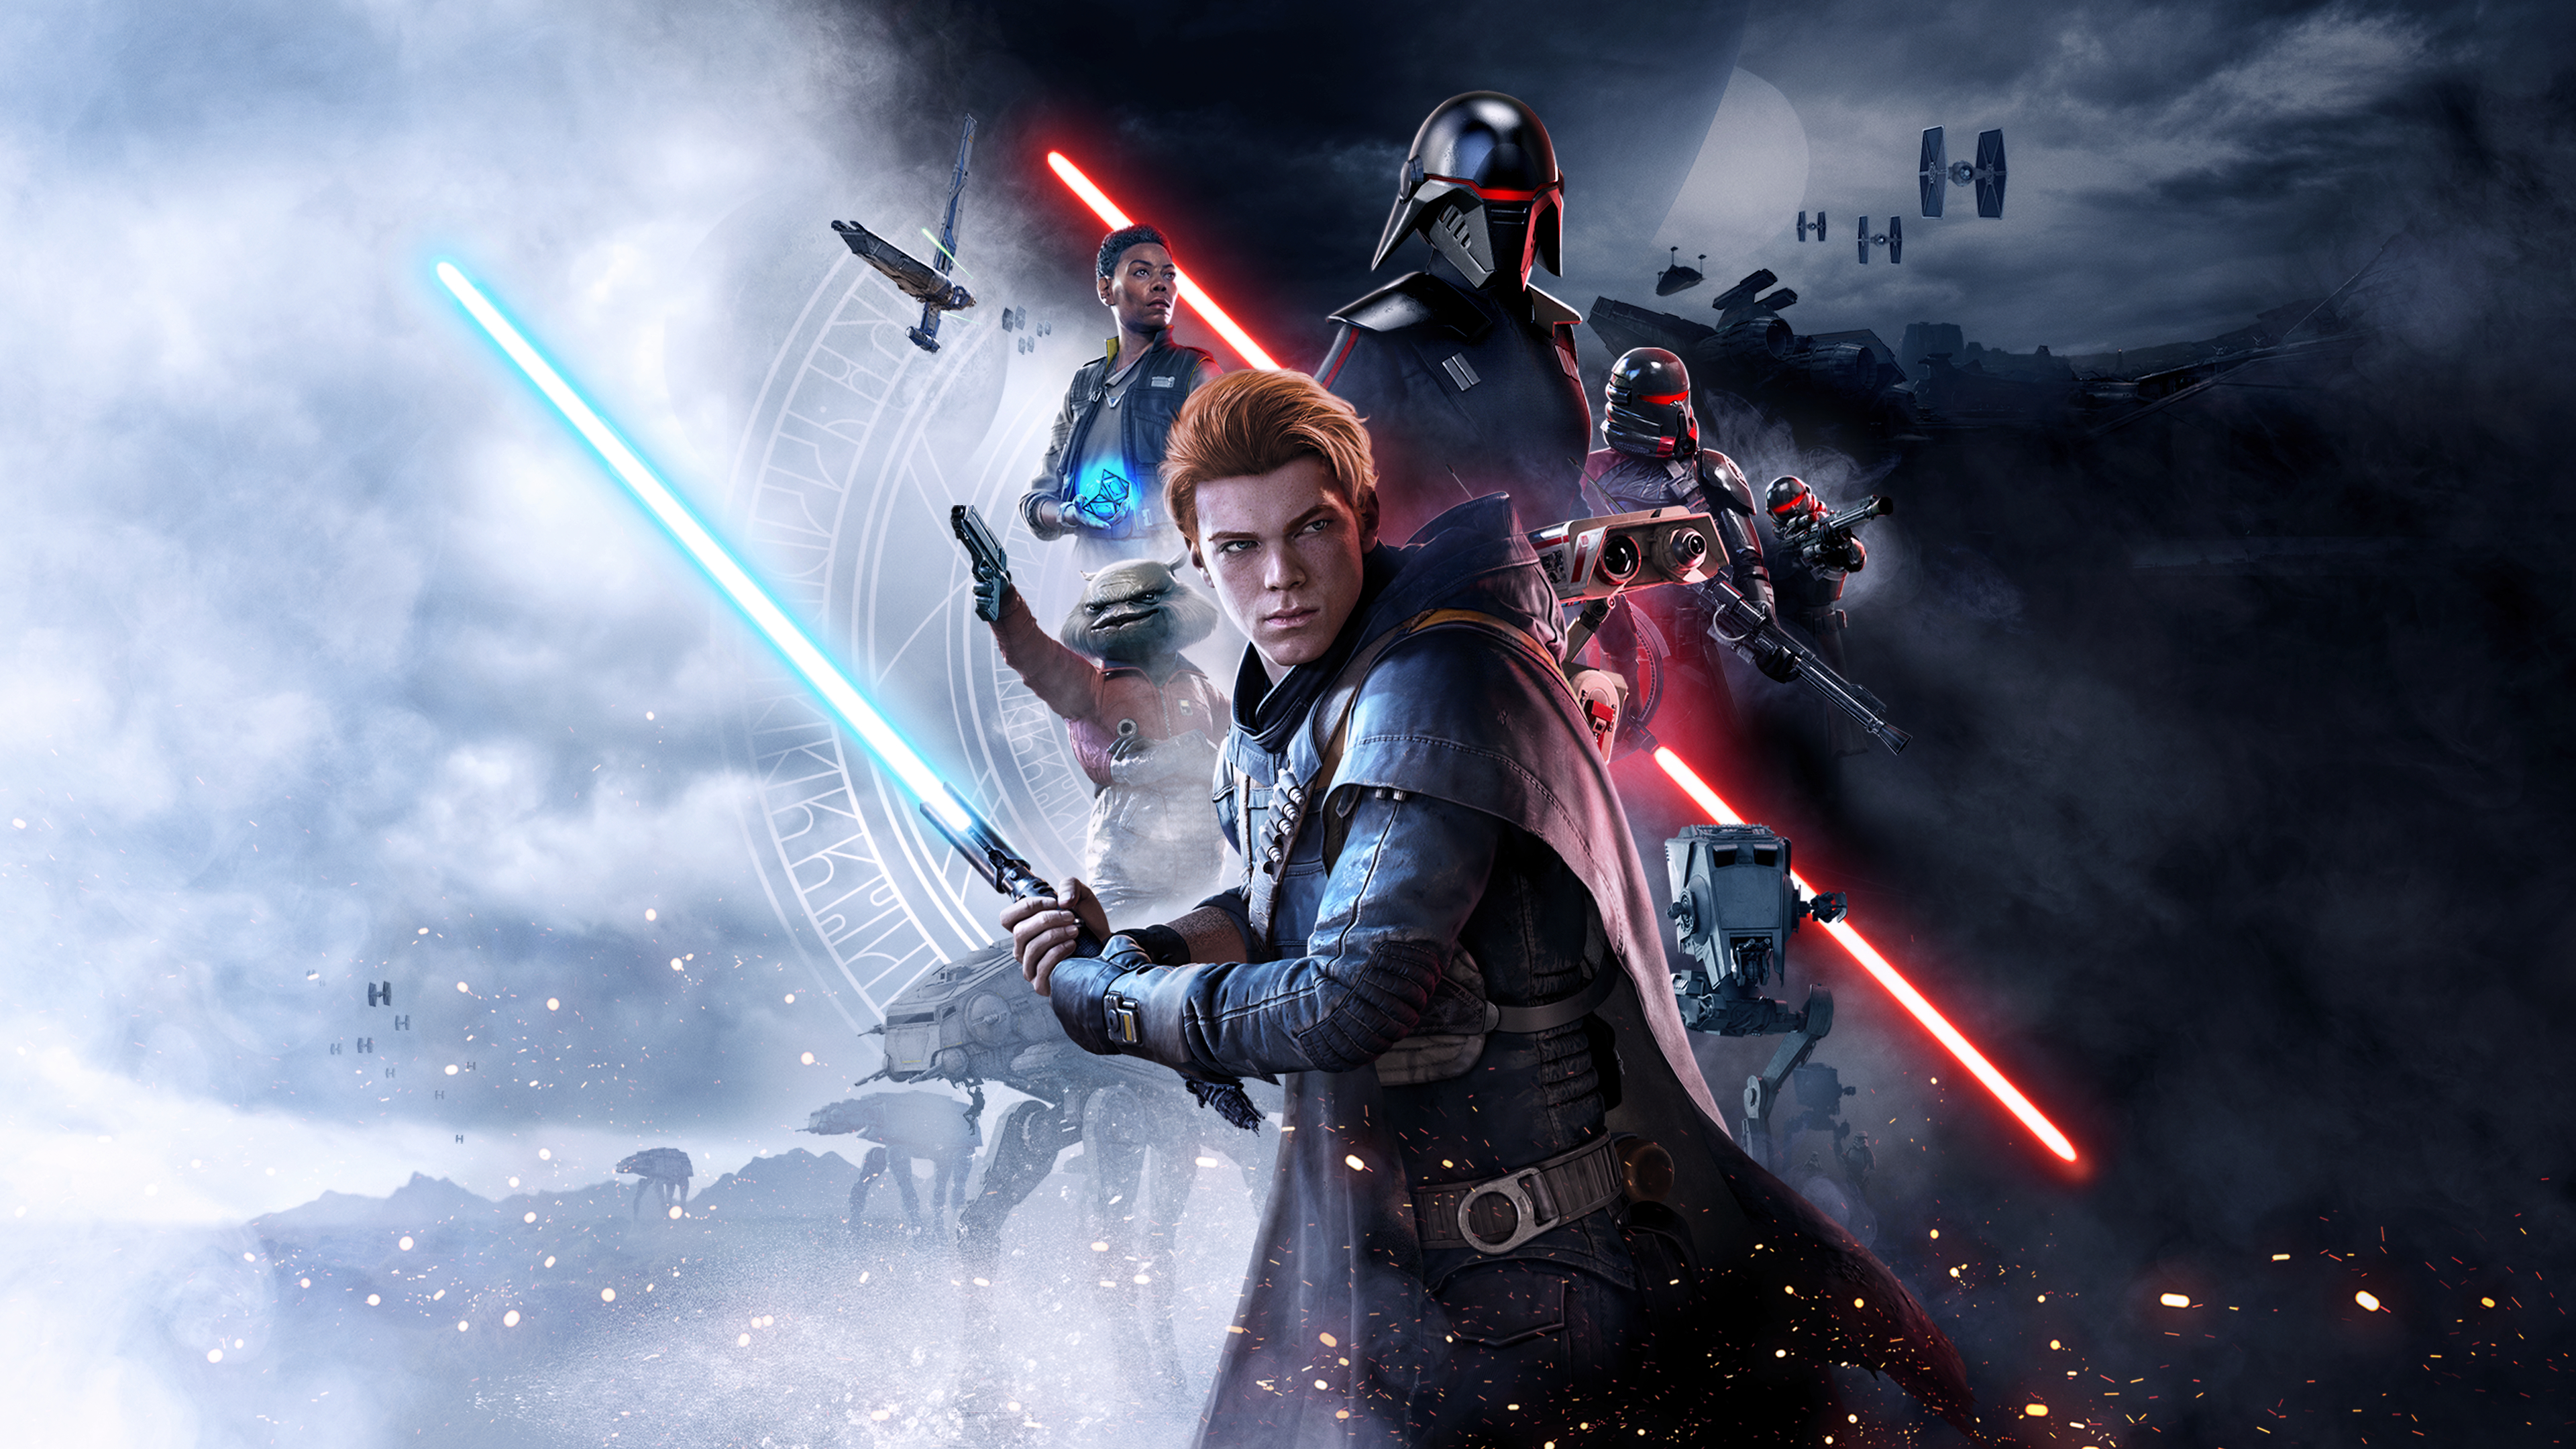 Star Wars Jedi Fallen Order Poster 2019 Wallpaper, HD Games 4K